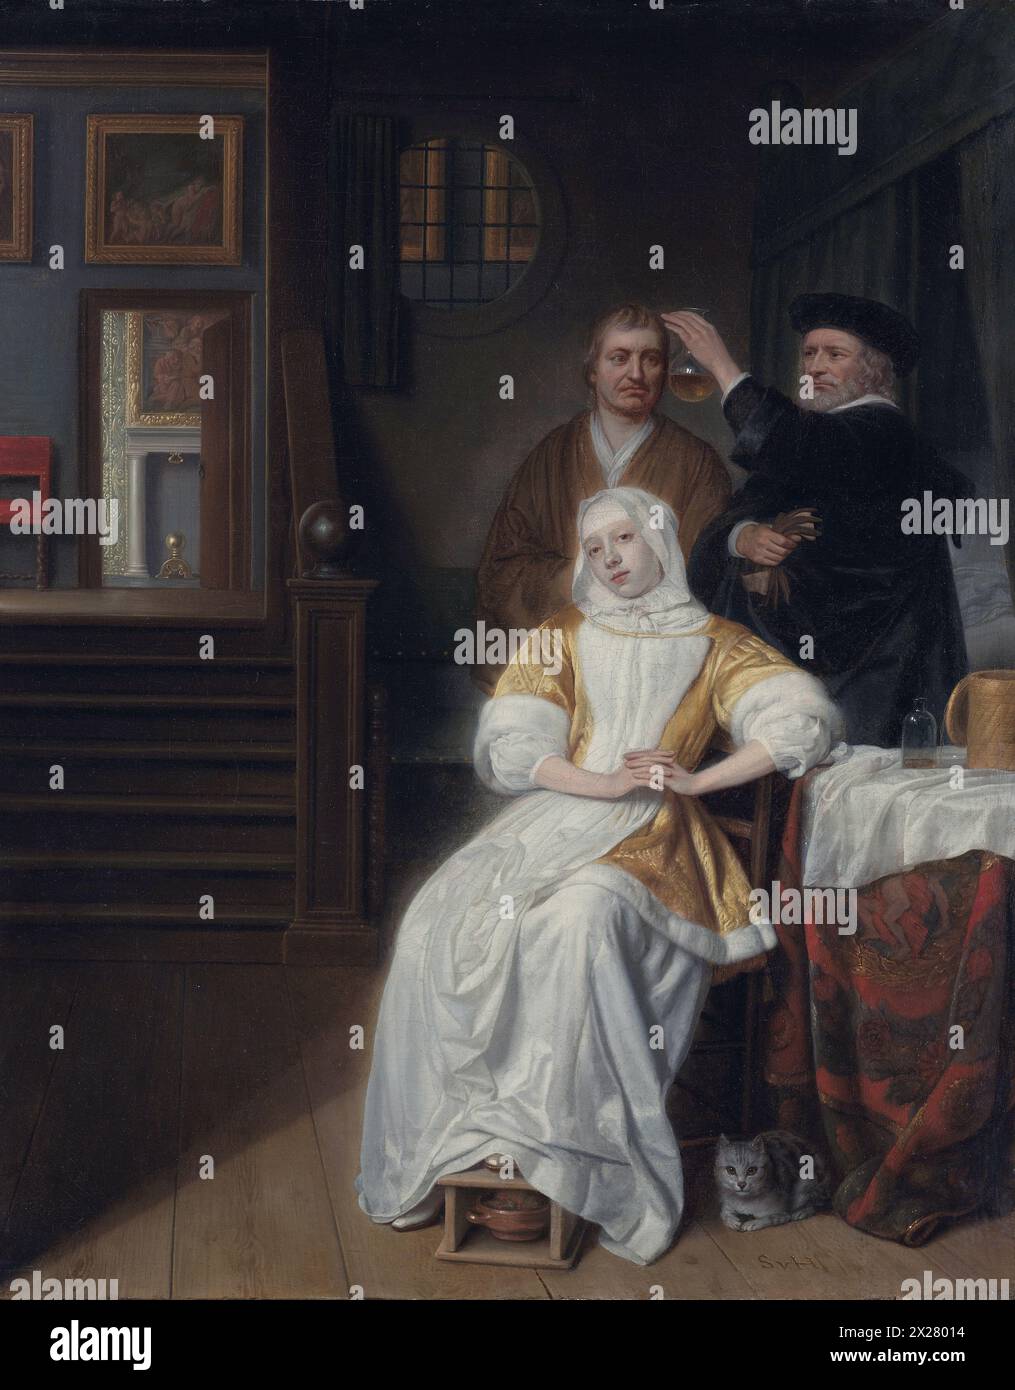 The anemic lady, c. 1667 Samuel van Hoogstraten Stock Photo